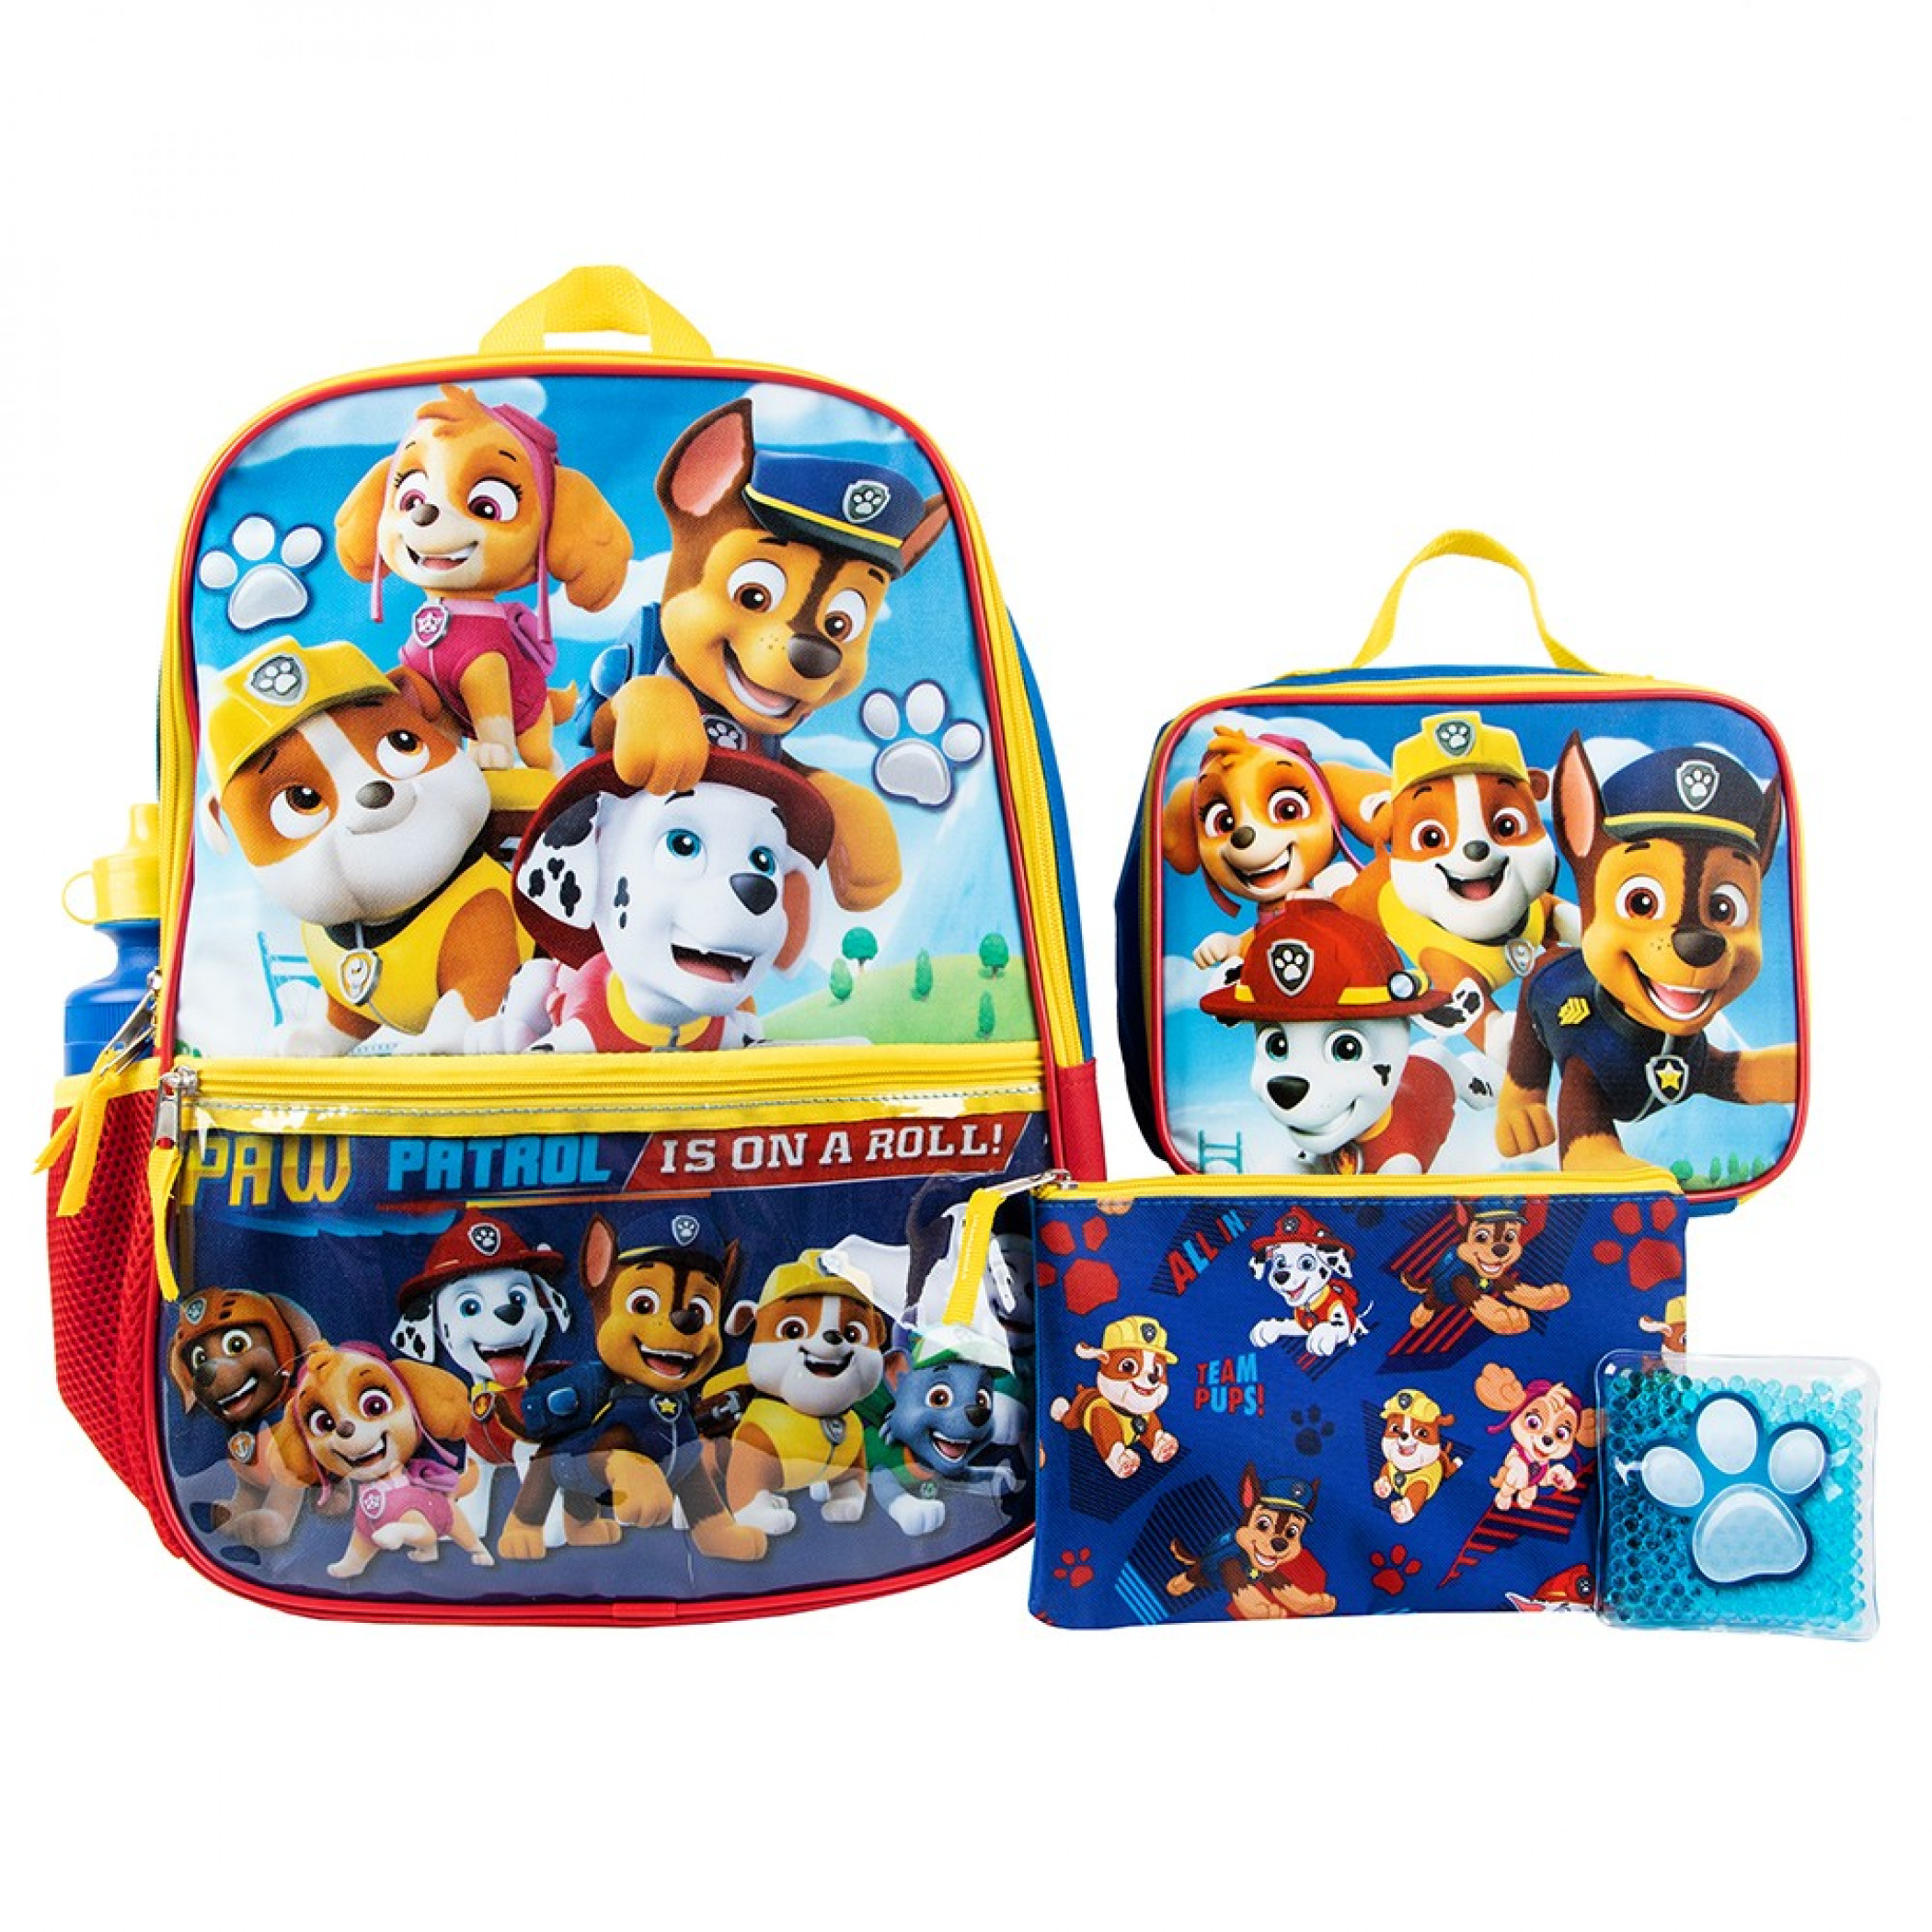 Paw Patrol School Backpack Lunch Box Book Bag 5 Piece SET Kids Gift Boy Girl New 